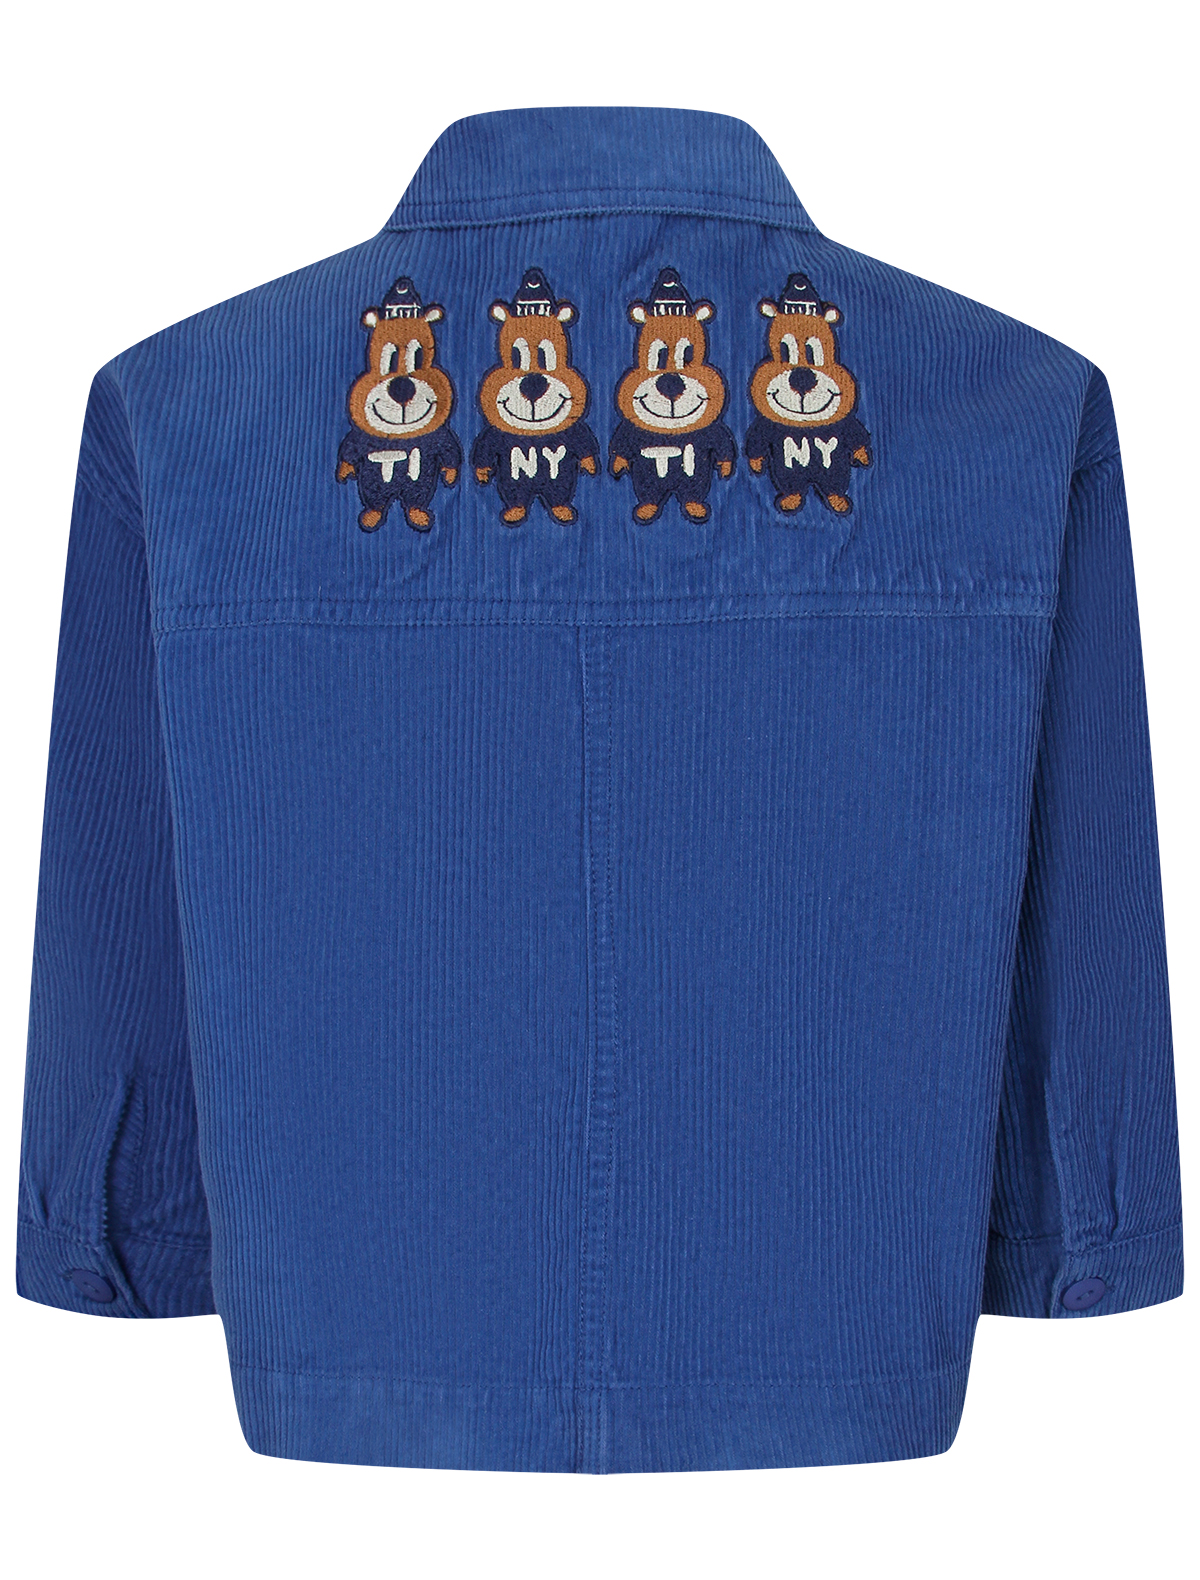 Куртка TINYCOTTONS 2618729, цвет синий, размер 4 1074519384615 - фото 3